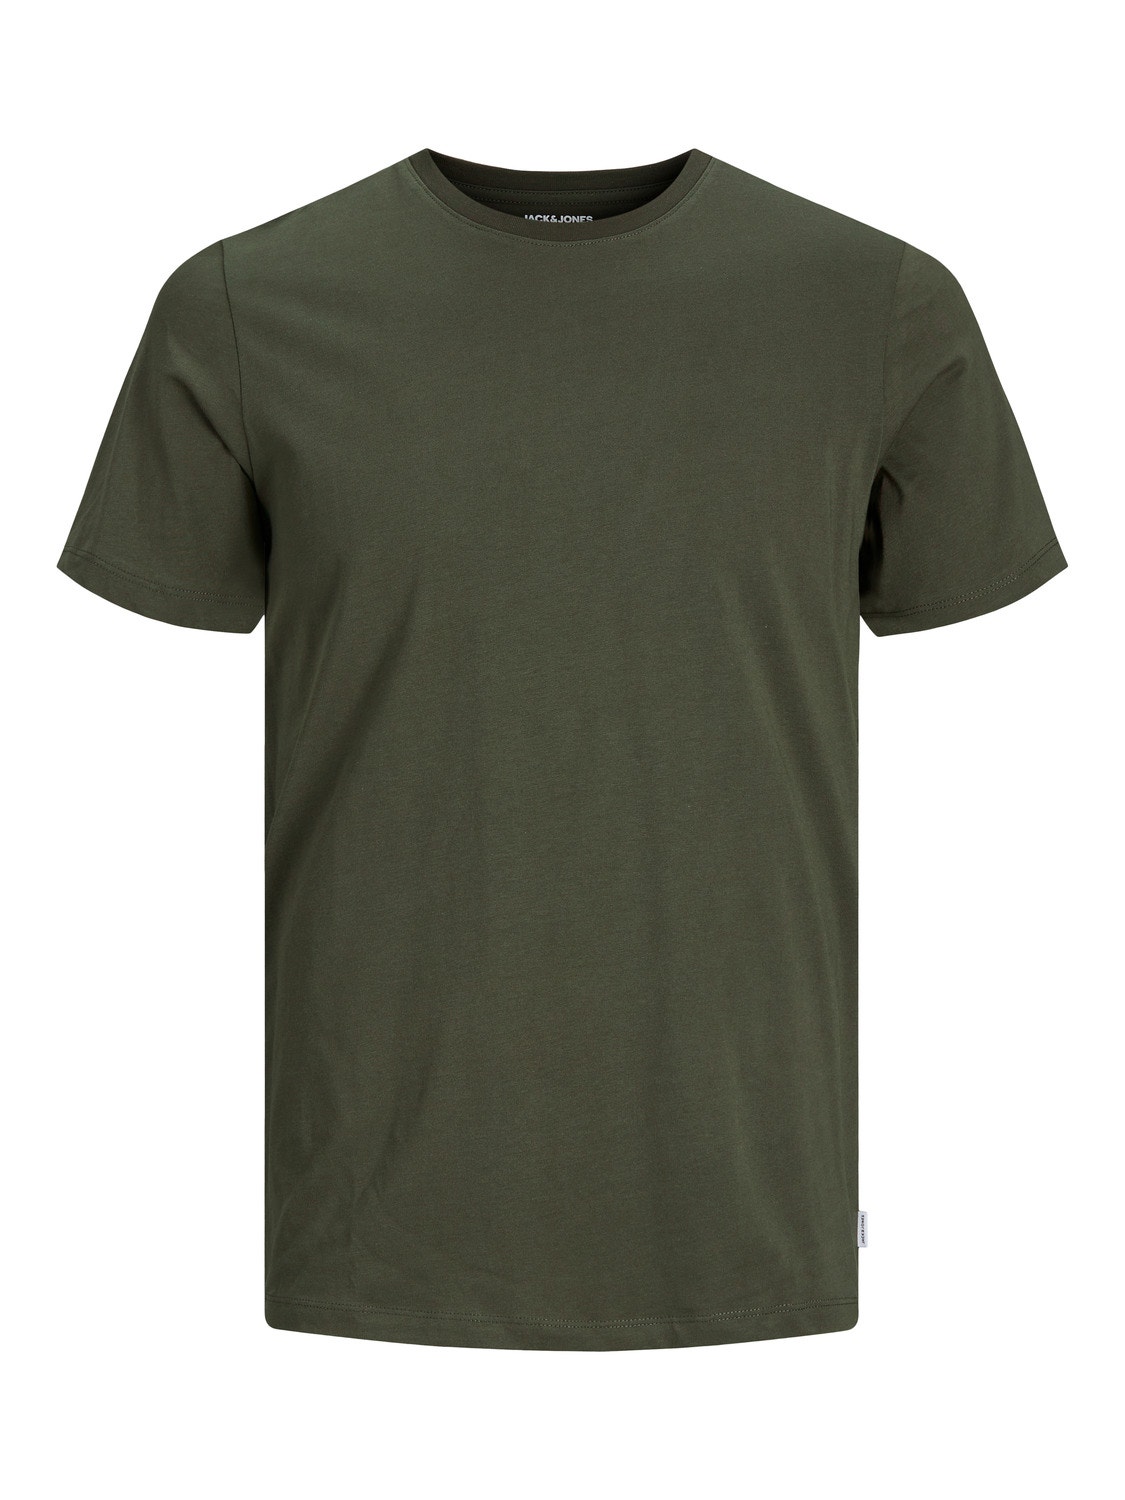 Jack & Jones Plain Crew neck T-shirt -Olive Night - 12156101